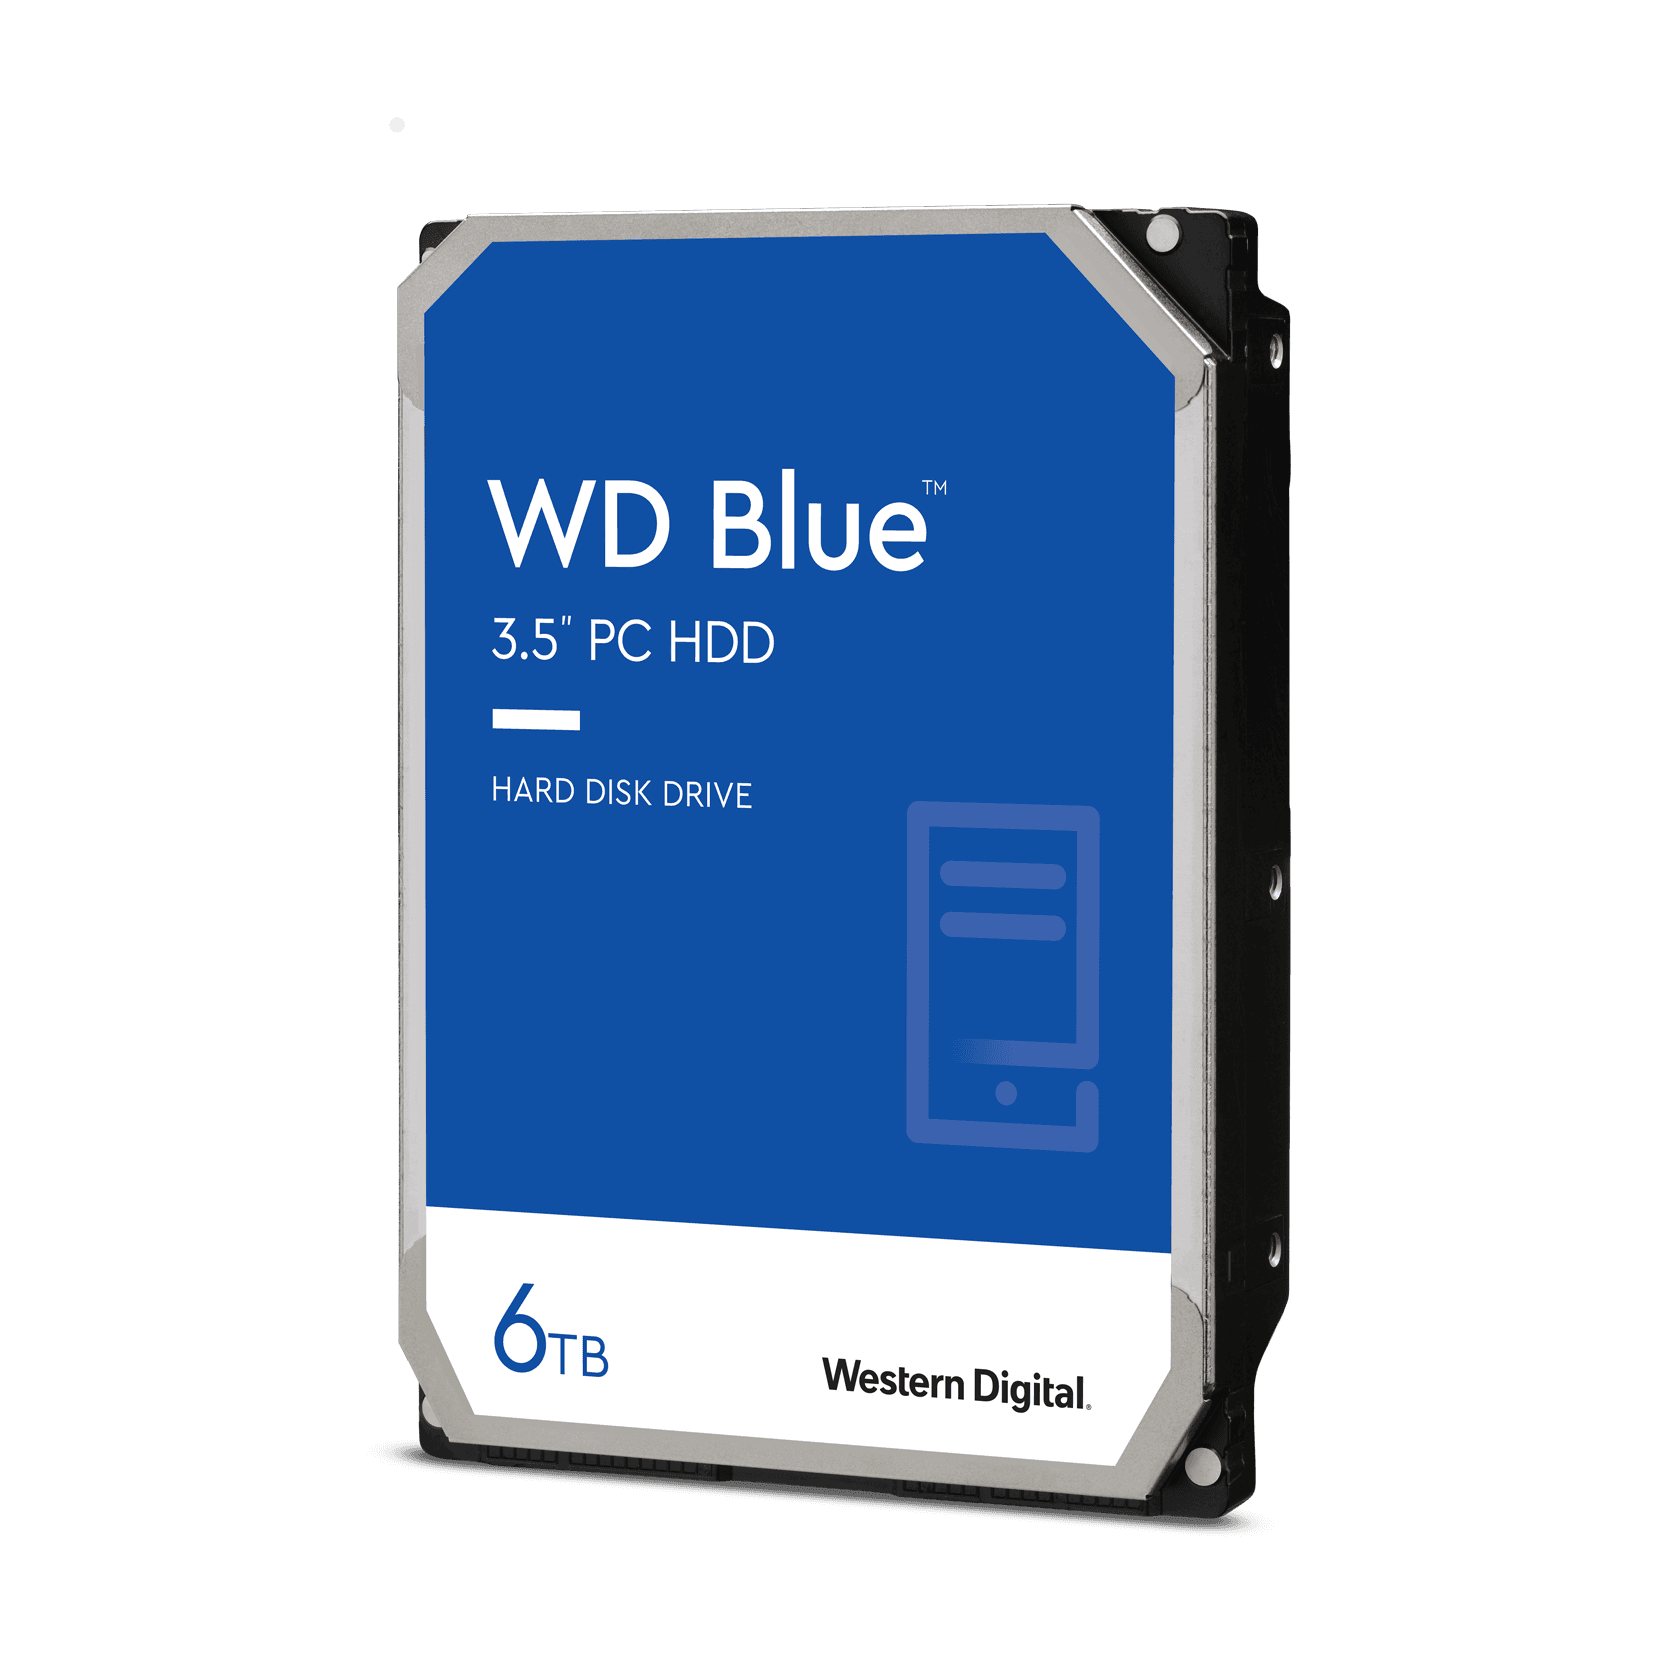 WESTERN DIGITAL WD BLUE 6TB SATA 6GB 256M 5400RPM 3.5"